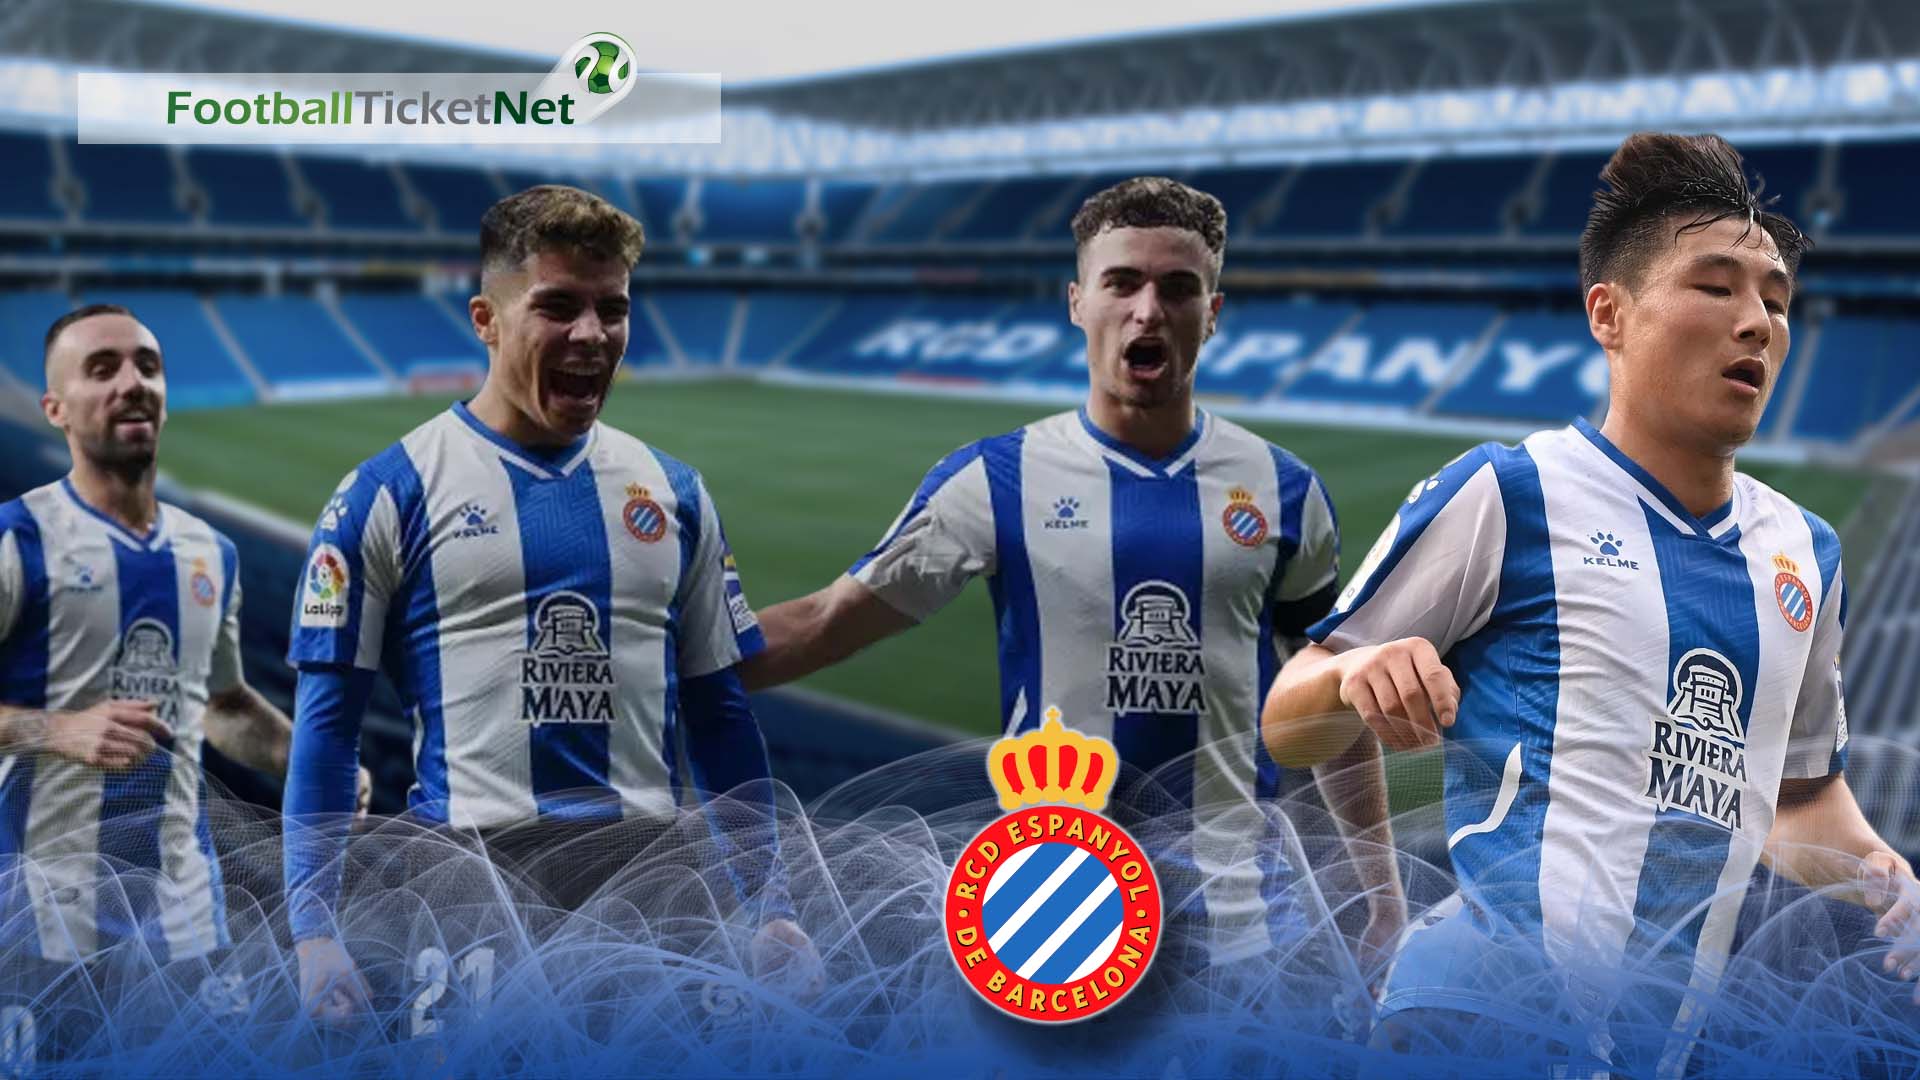 Buy RCD Espanyol Tickets 2022/23 | Football Net